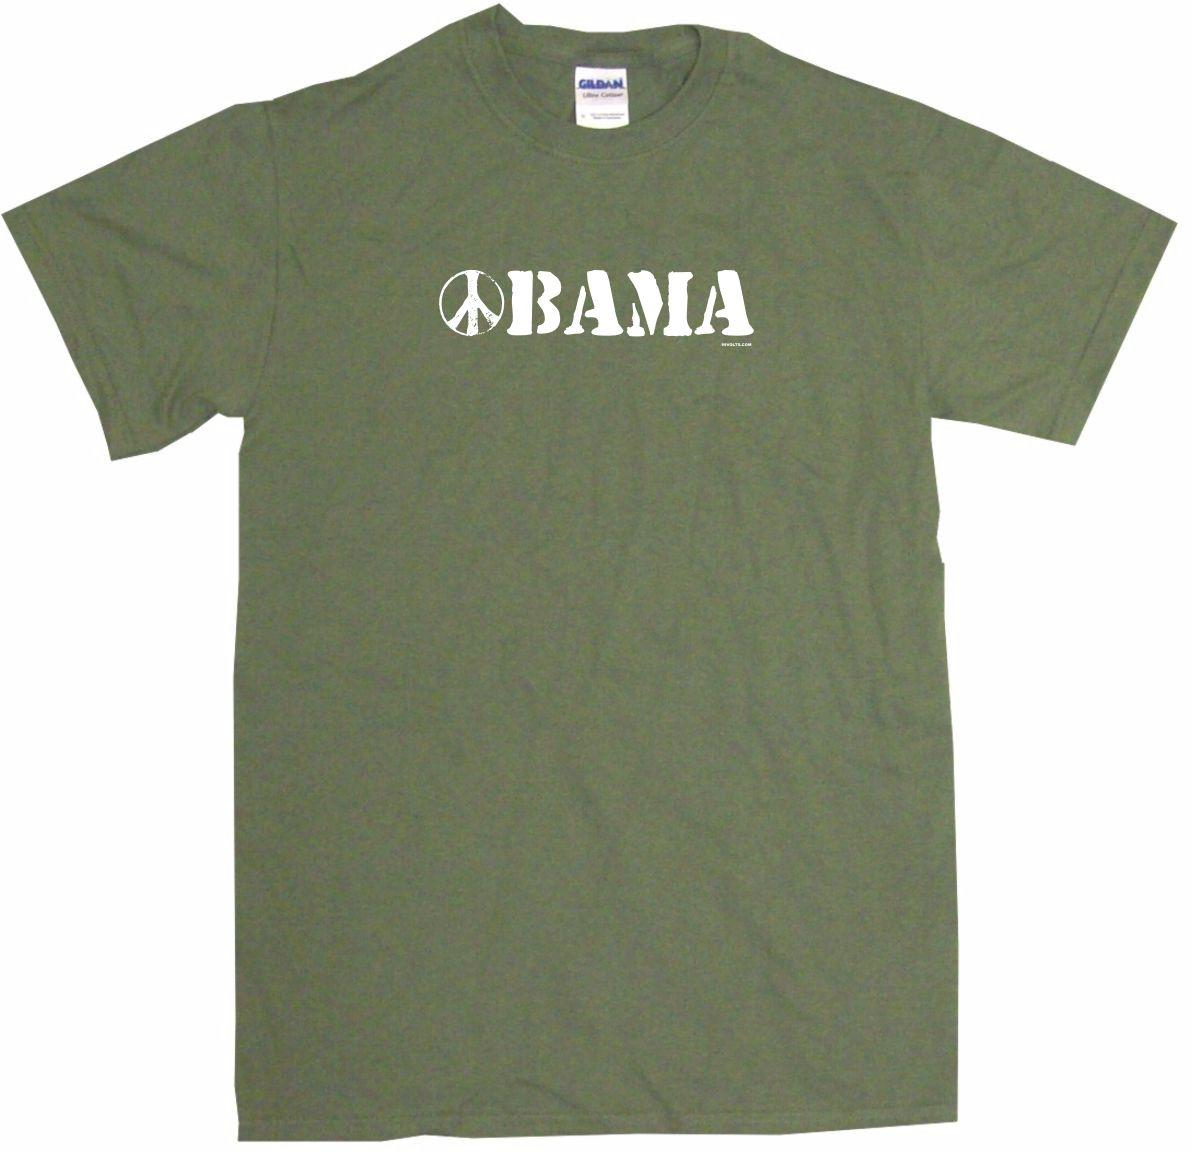 Small Obama Logo - Obama Peace Sign Logo Mens Tee Shirt Pick Size Color Small-6XL | eBay